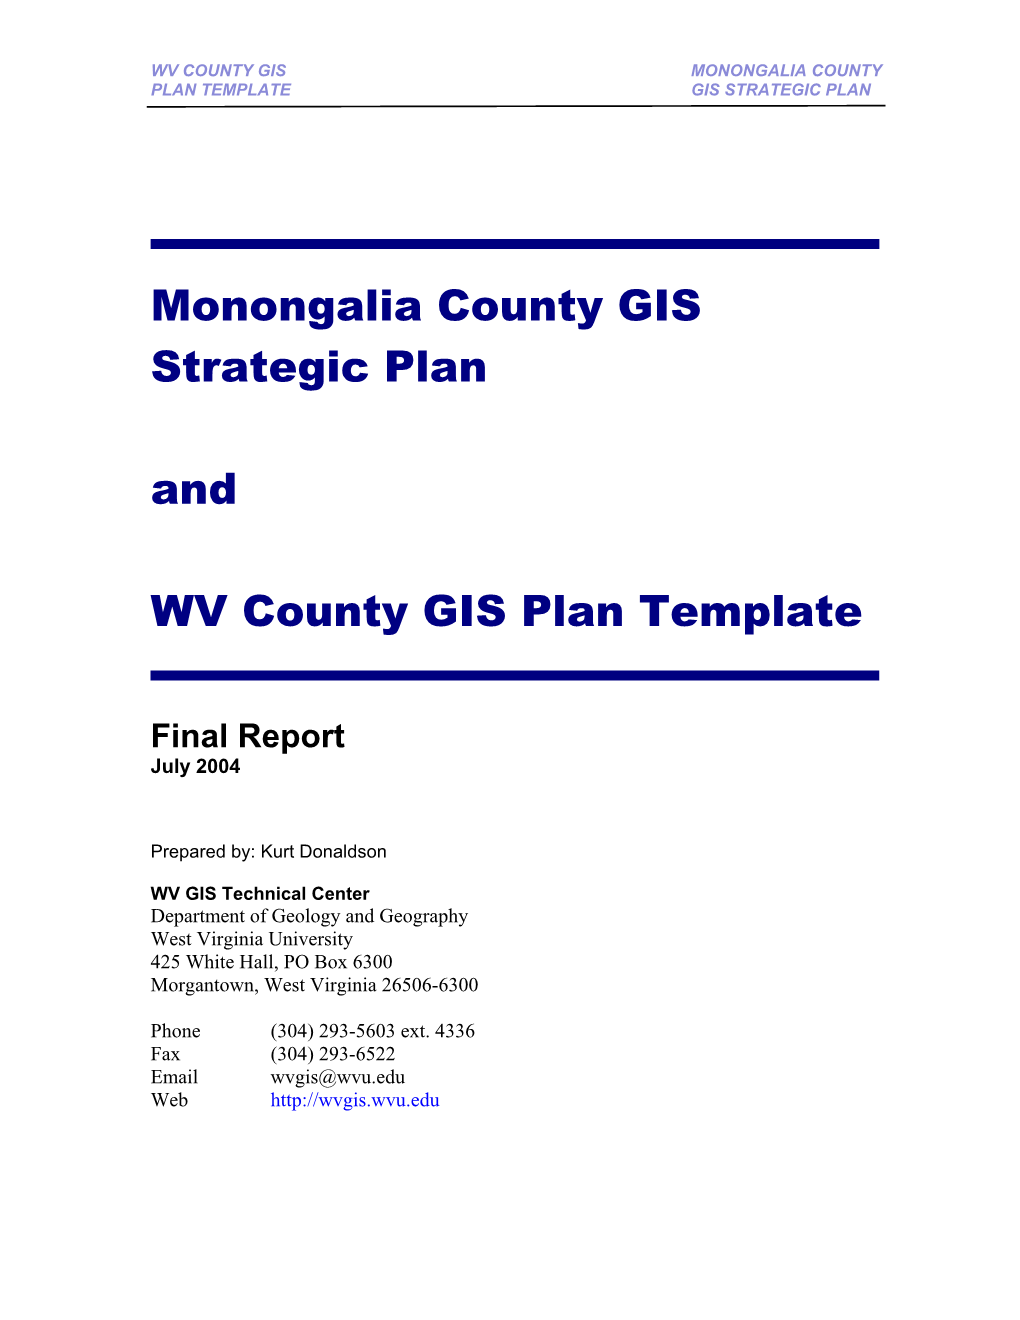 County GIS Strategic Plan Template